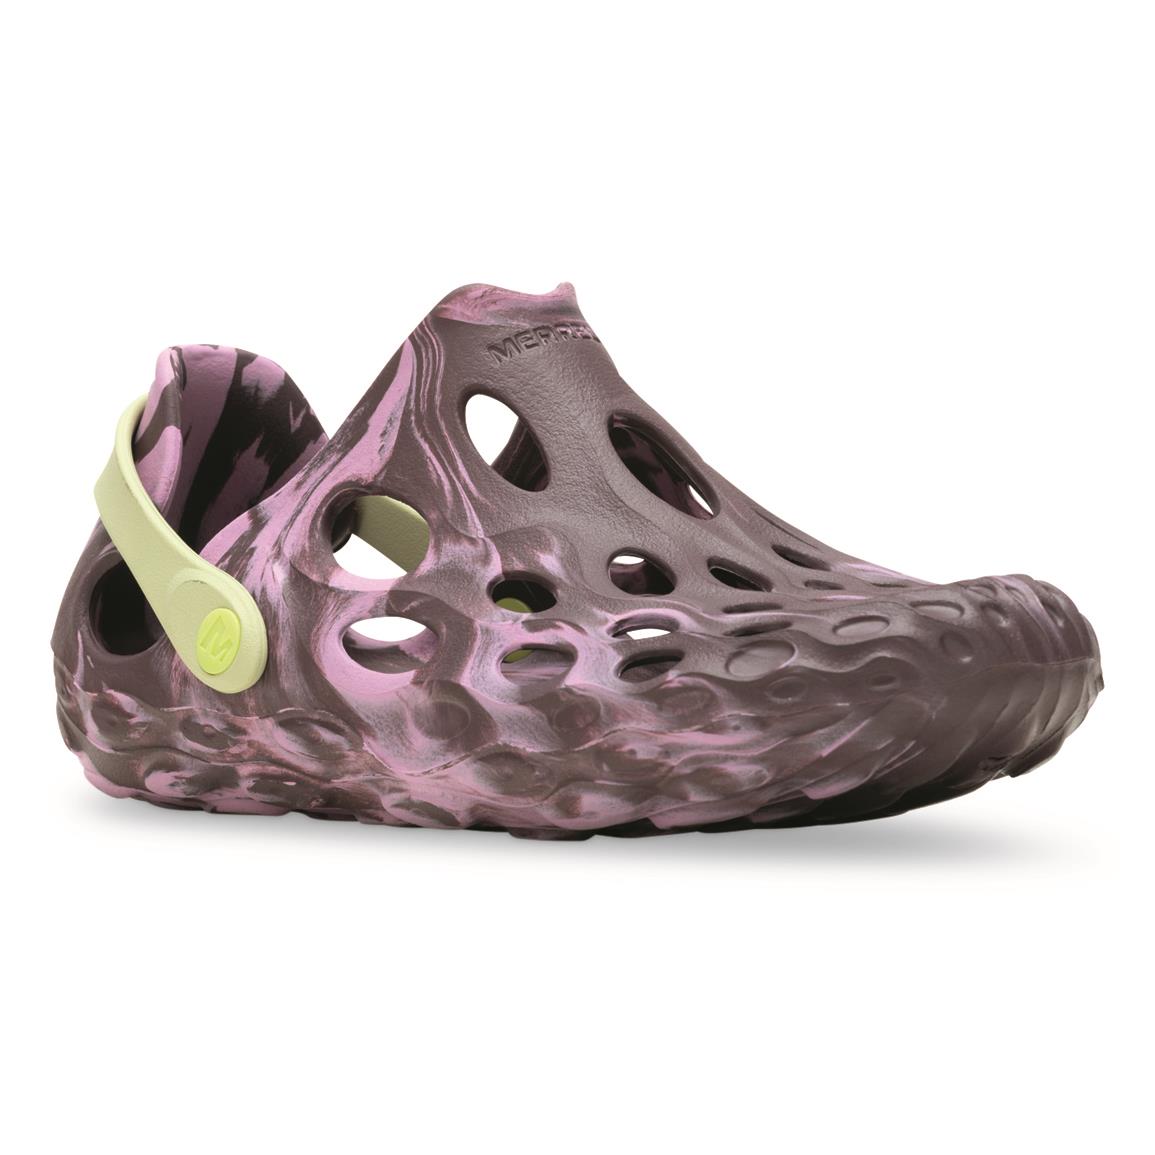 Merrell Women's Hydro Moc Sandals, Plumwine Fondant